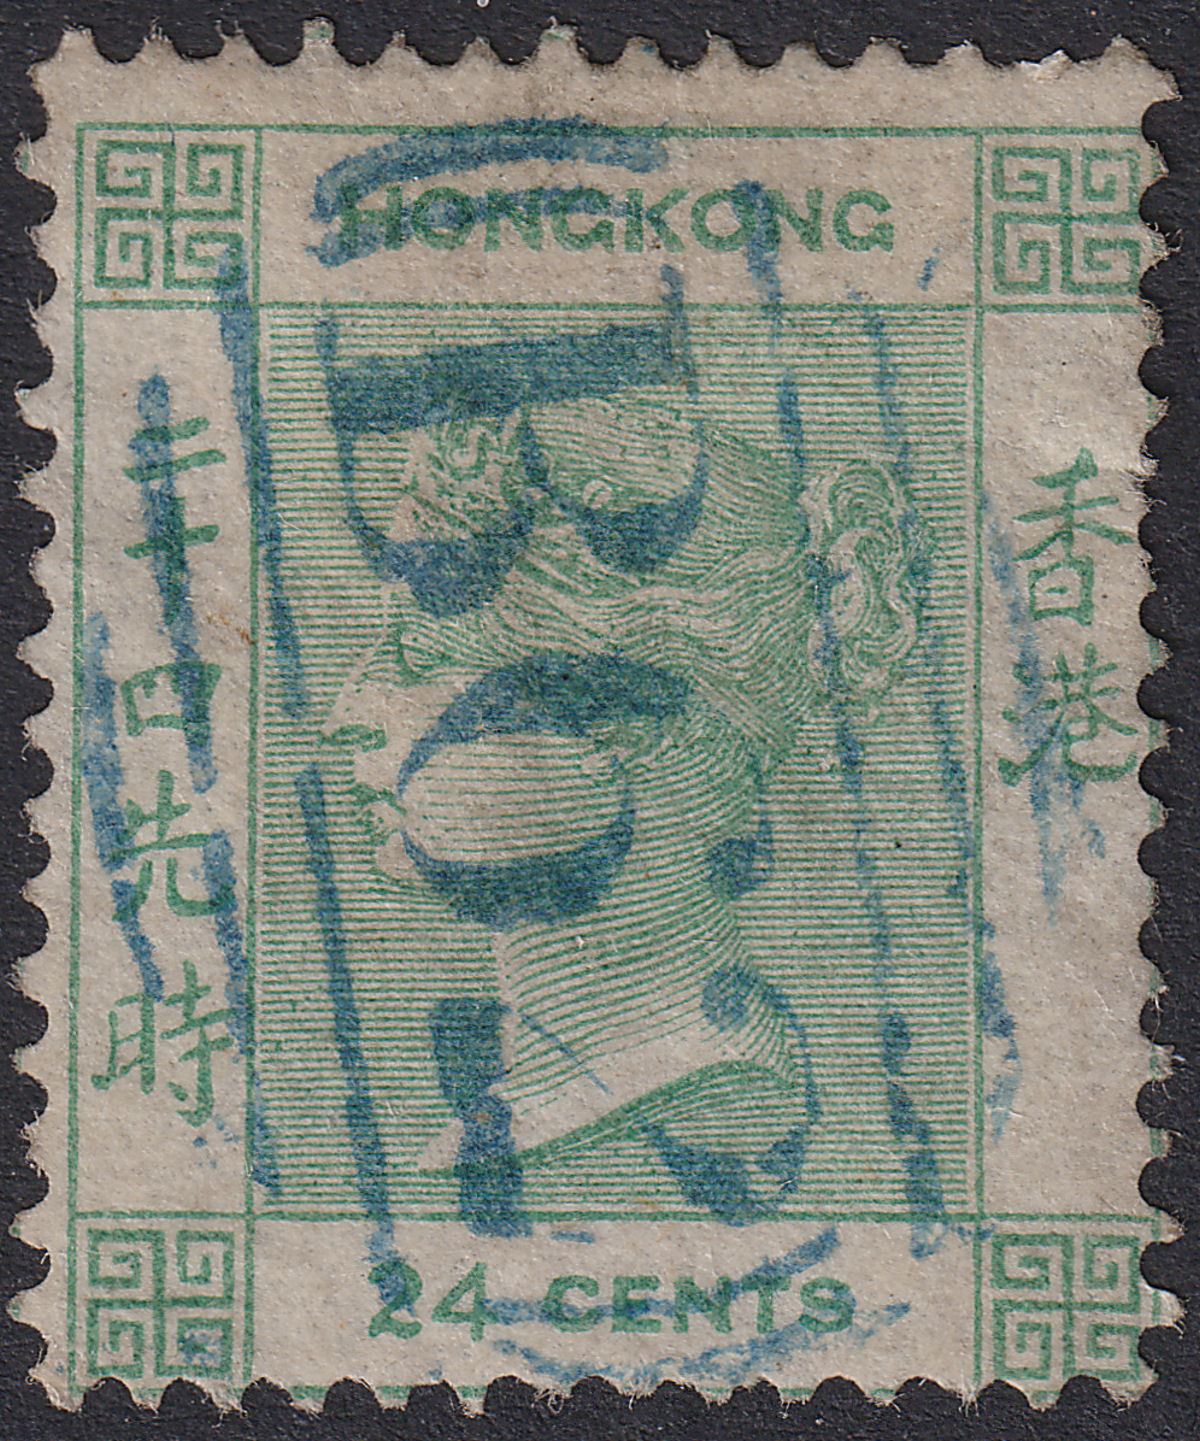 Hong Kong 1862 QV 24c Green Used SG5 cat £120 with blue B62 postmark